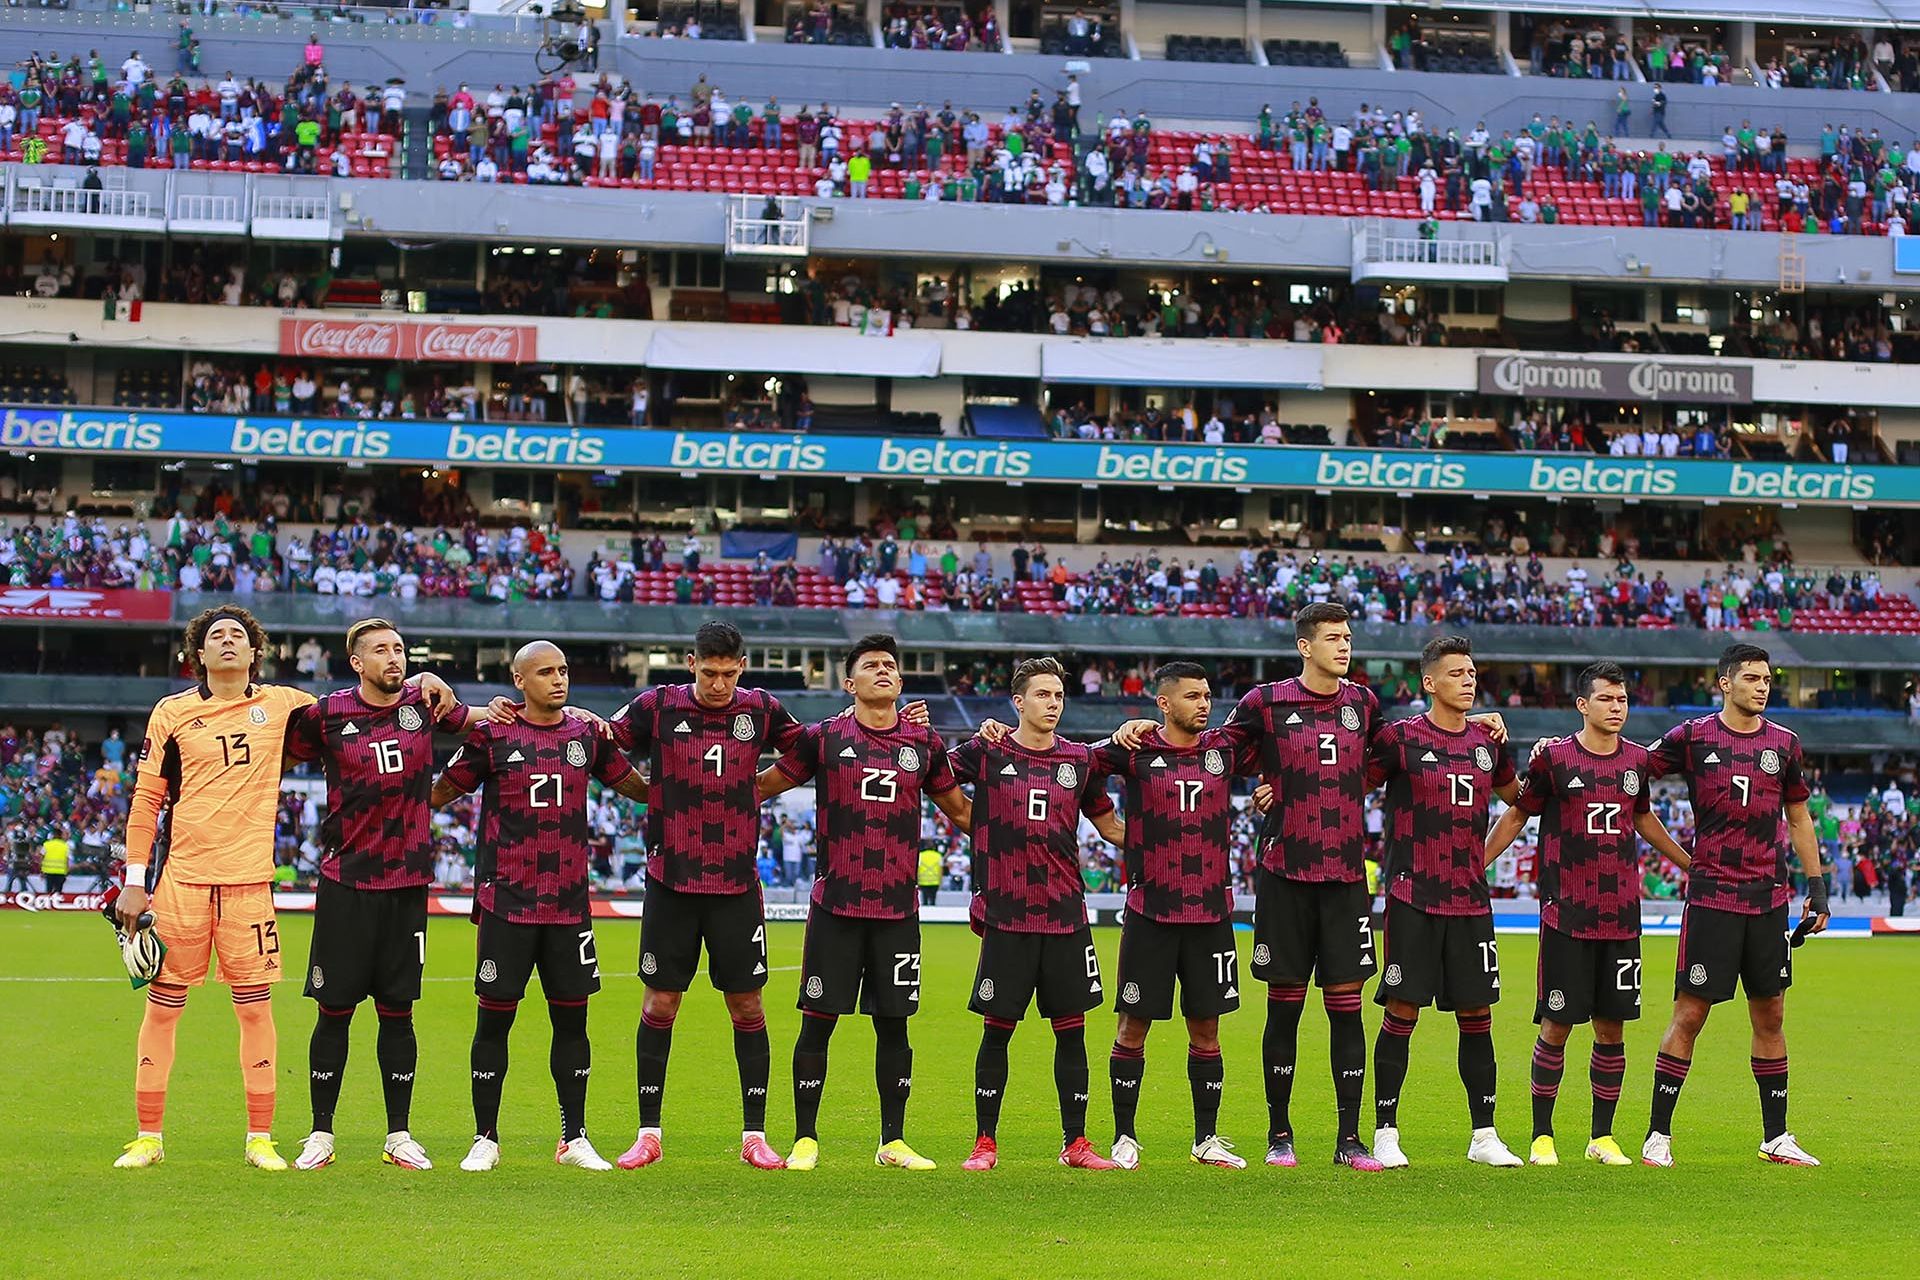 The Azteca Stadium